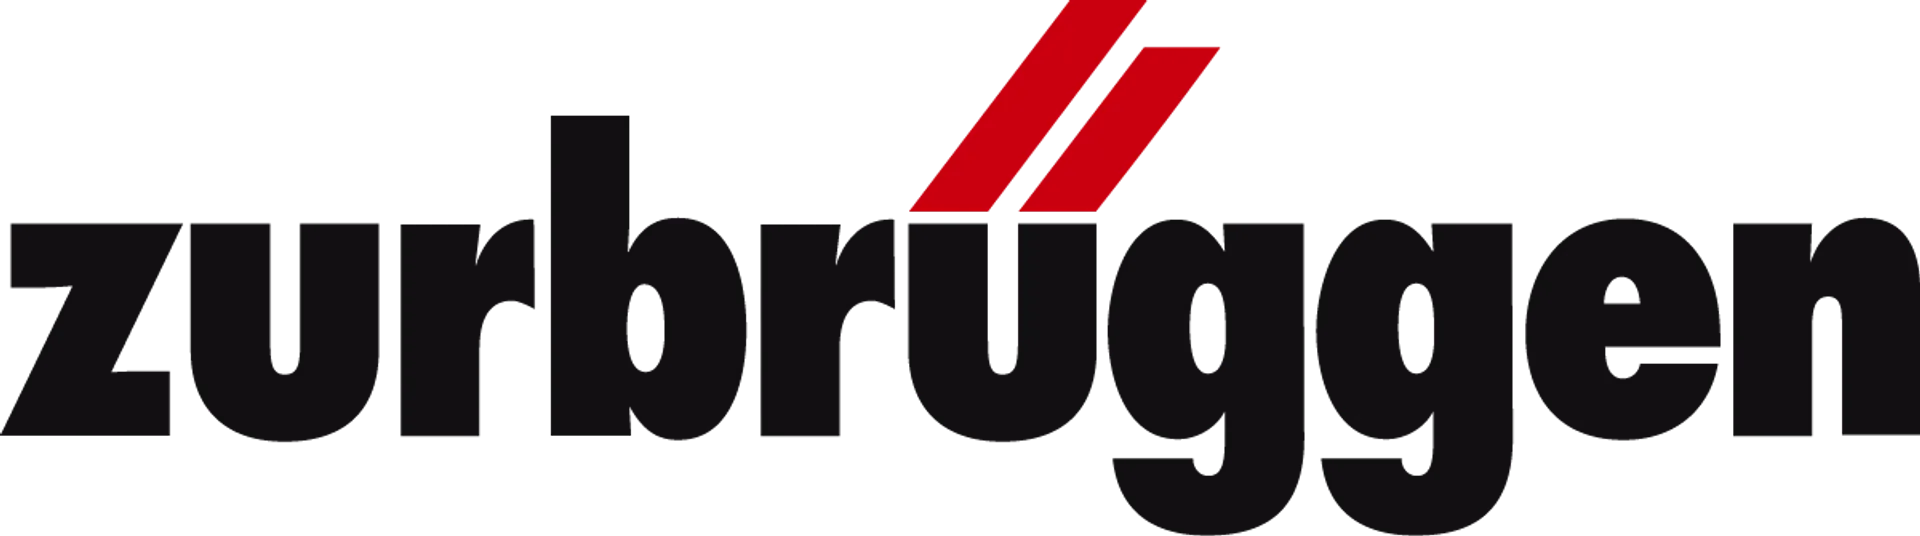 ZURBRÜGGEN logo